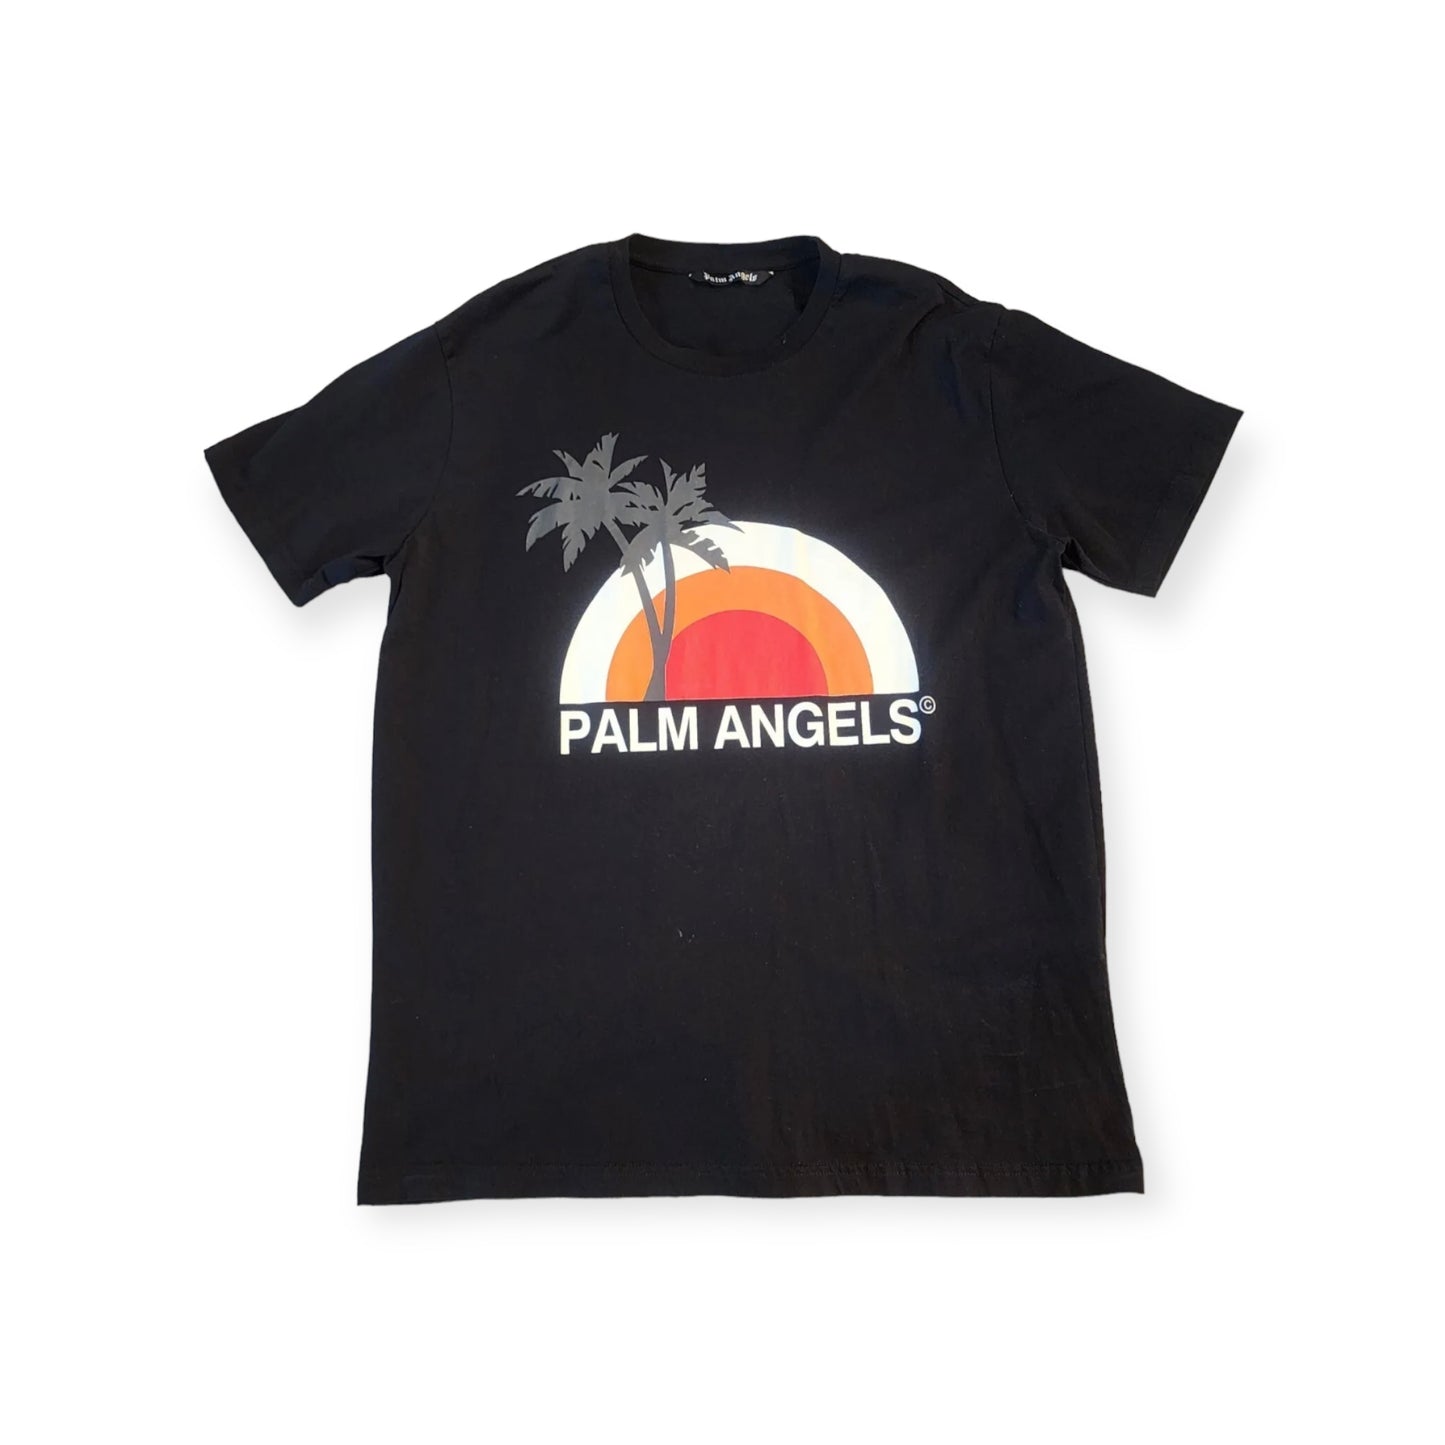 Palm Angeles Logo Tee Size M